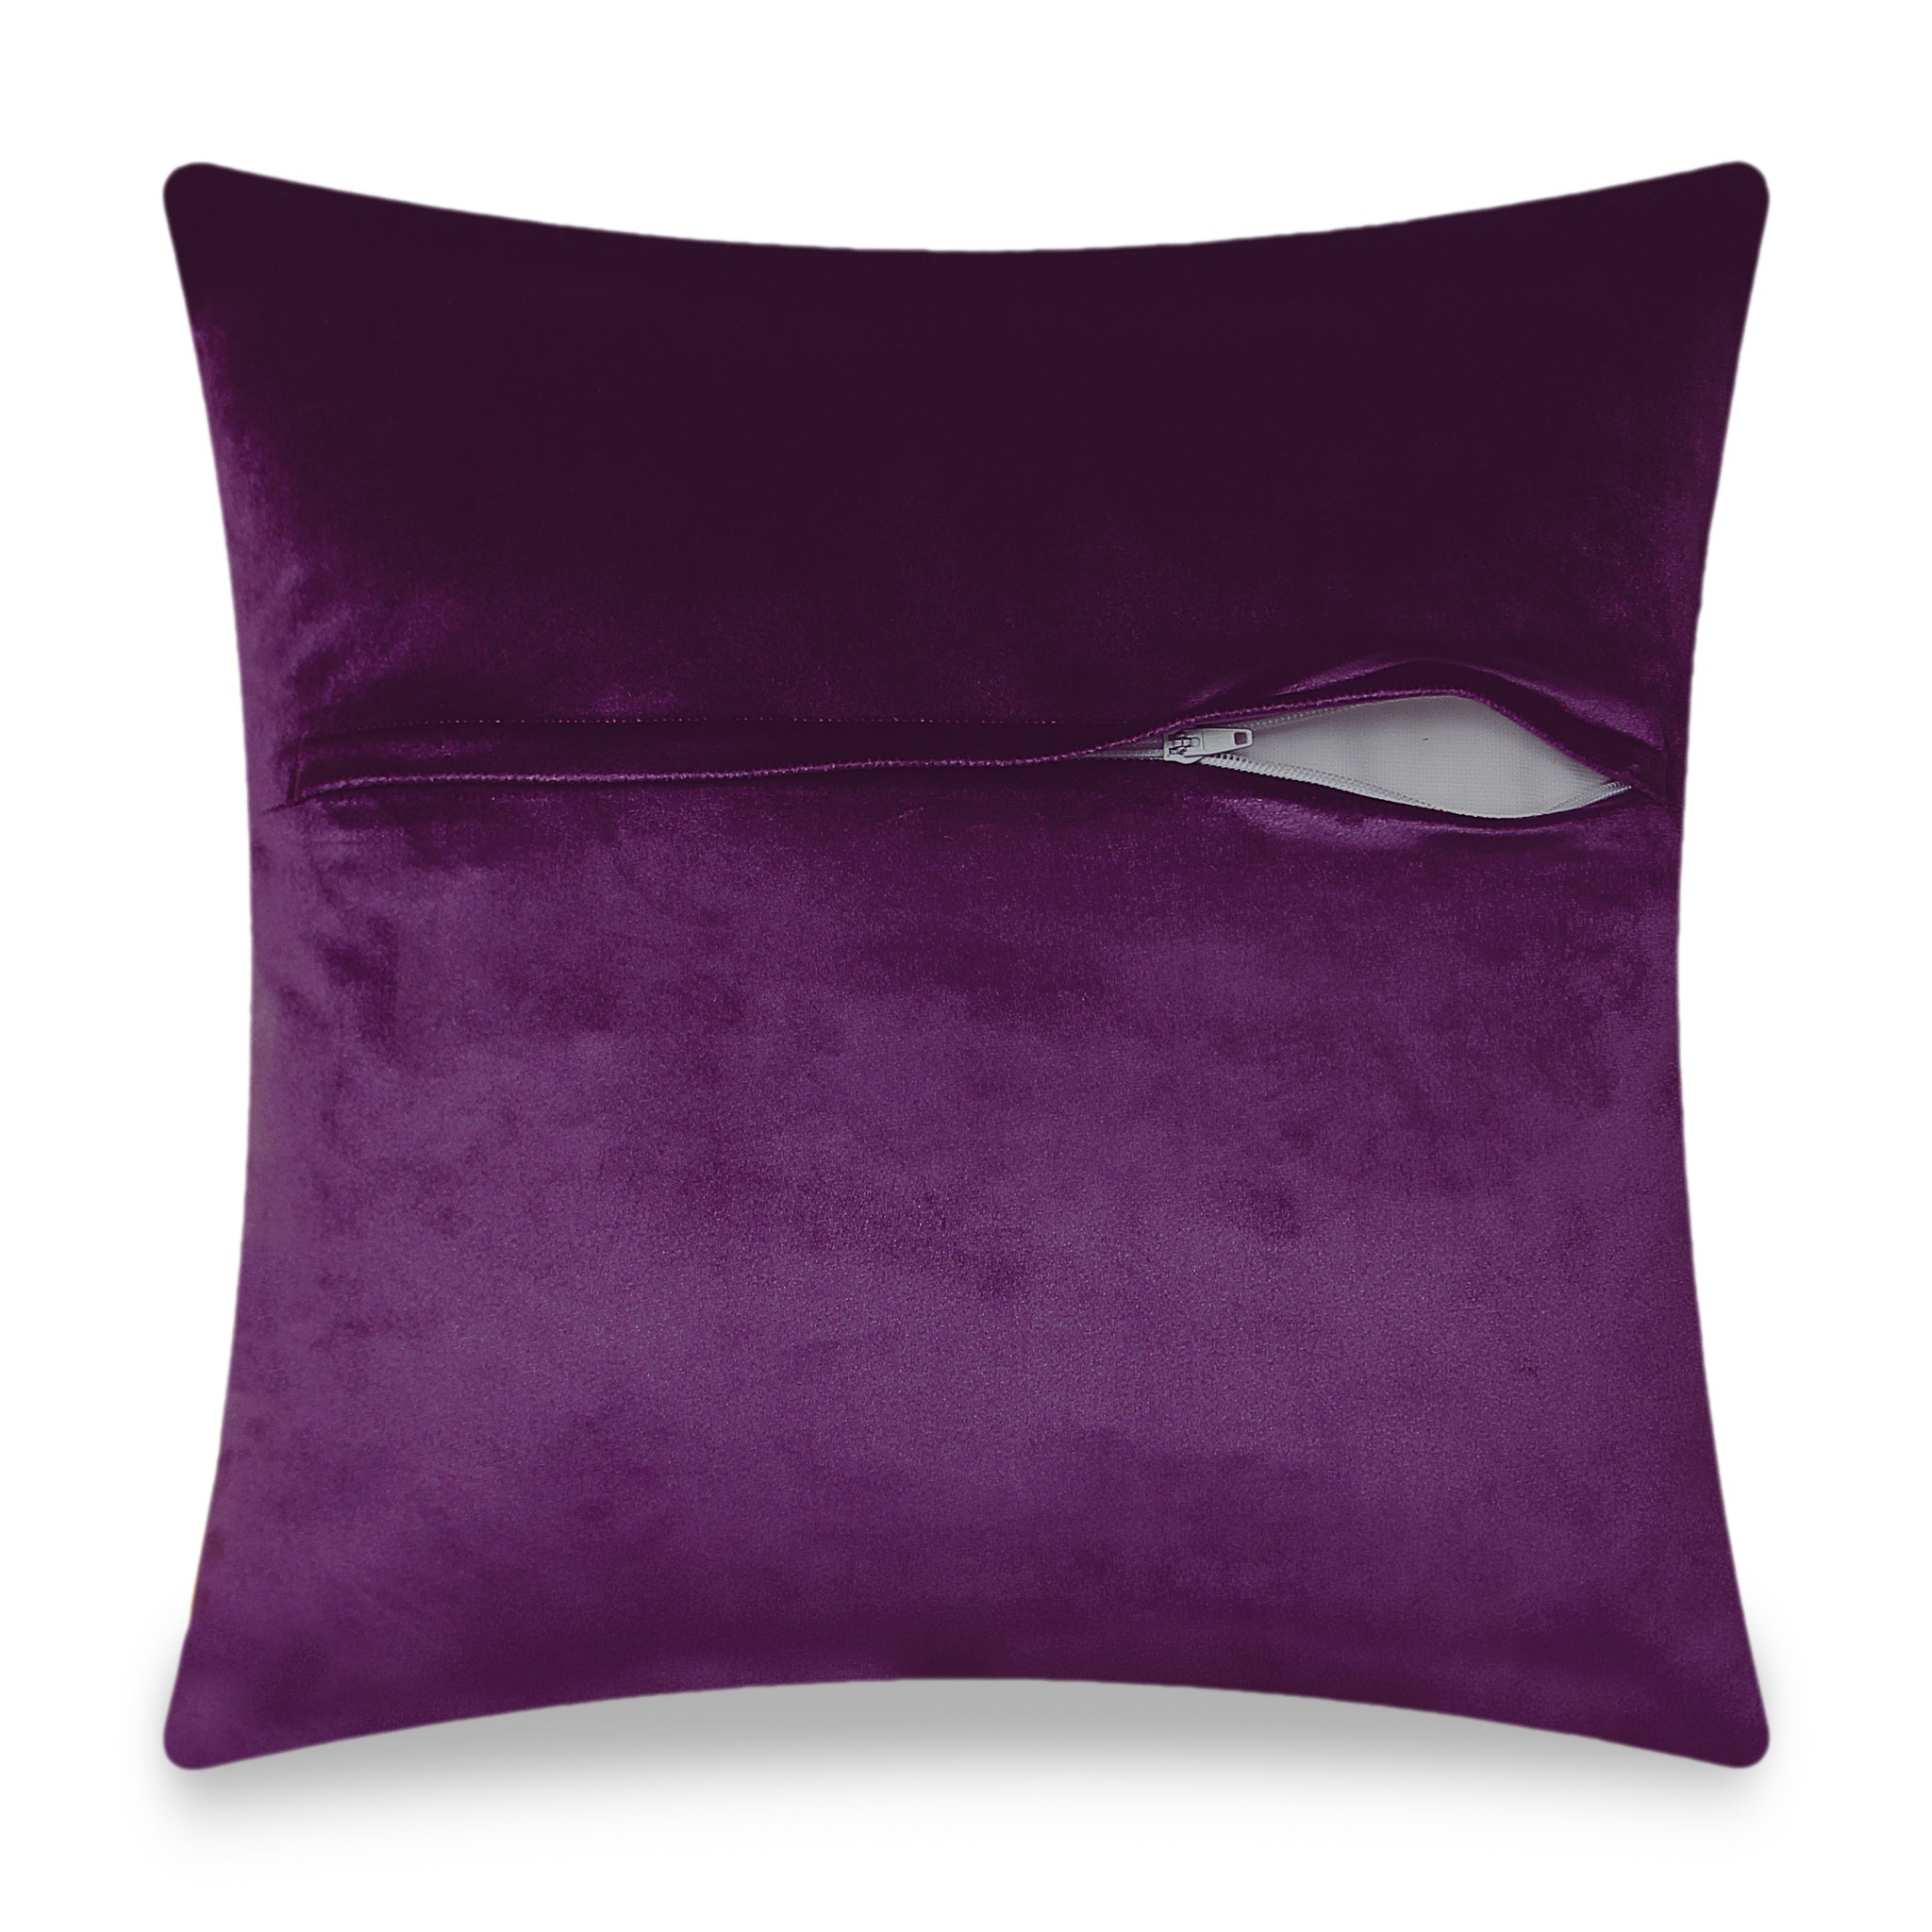  Velvet Cushion Cover Floral and Antique Decorative Pillowcase Classic Home Decor Throw Pillow for Sofa Chair 45x45 cm 